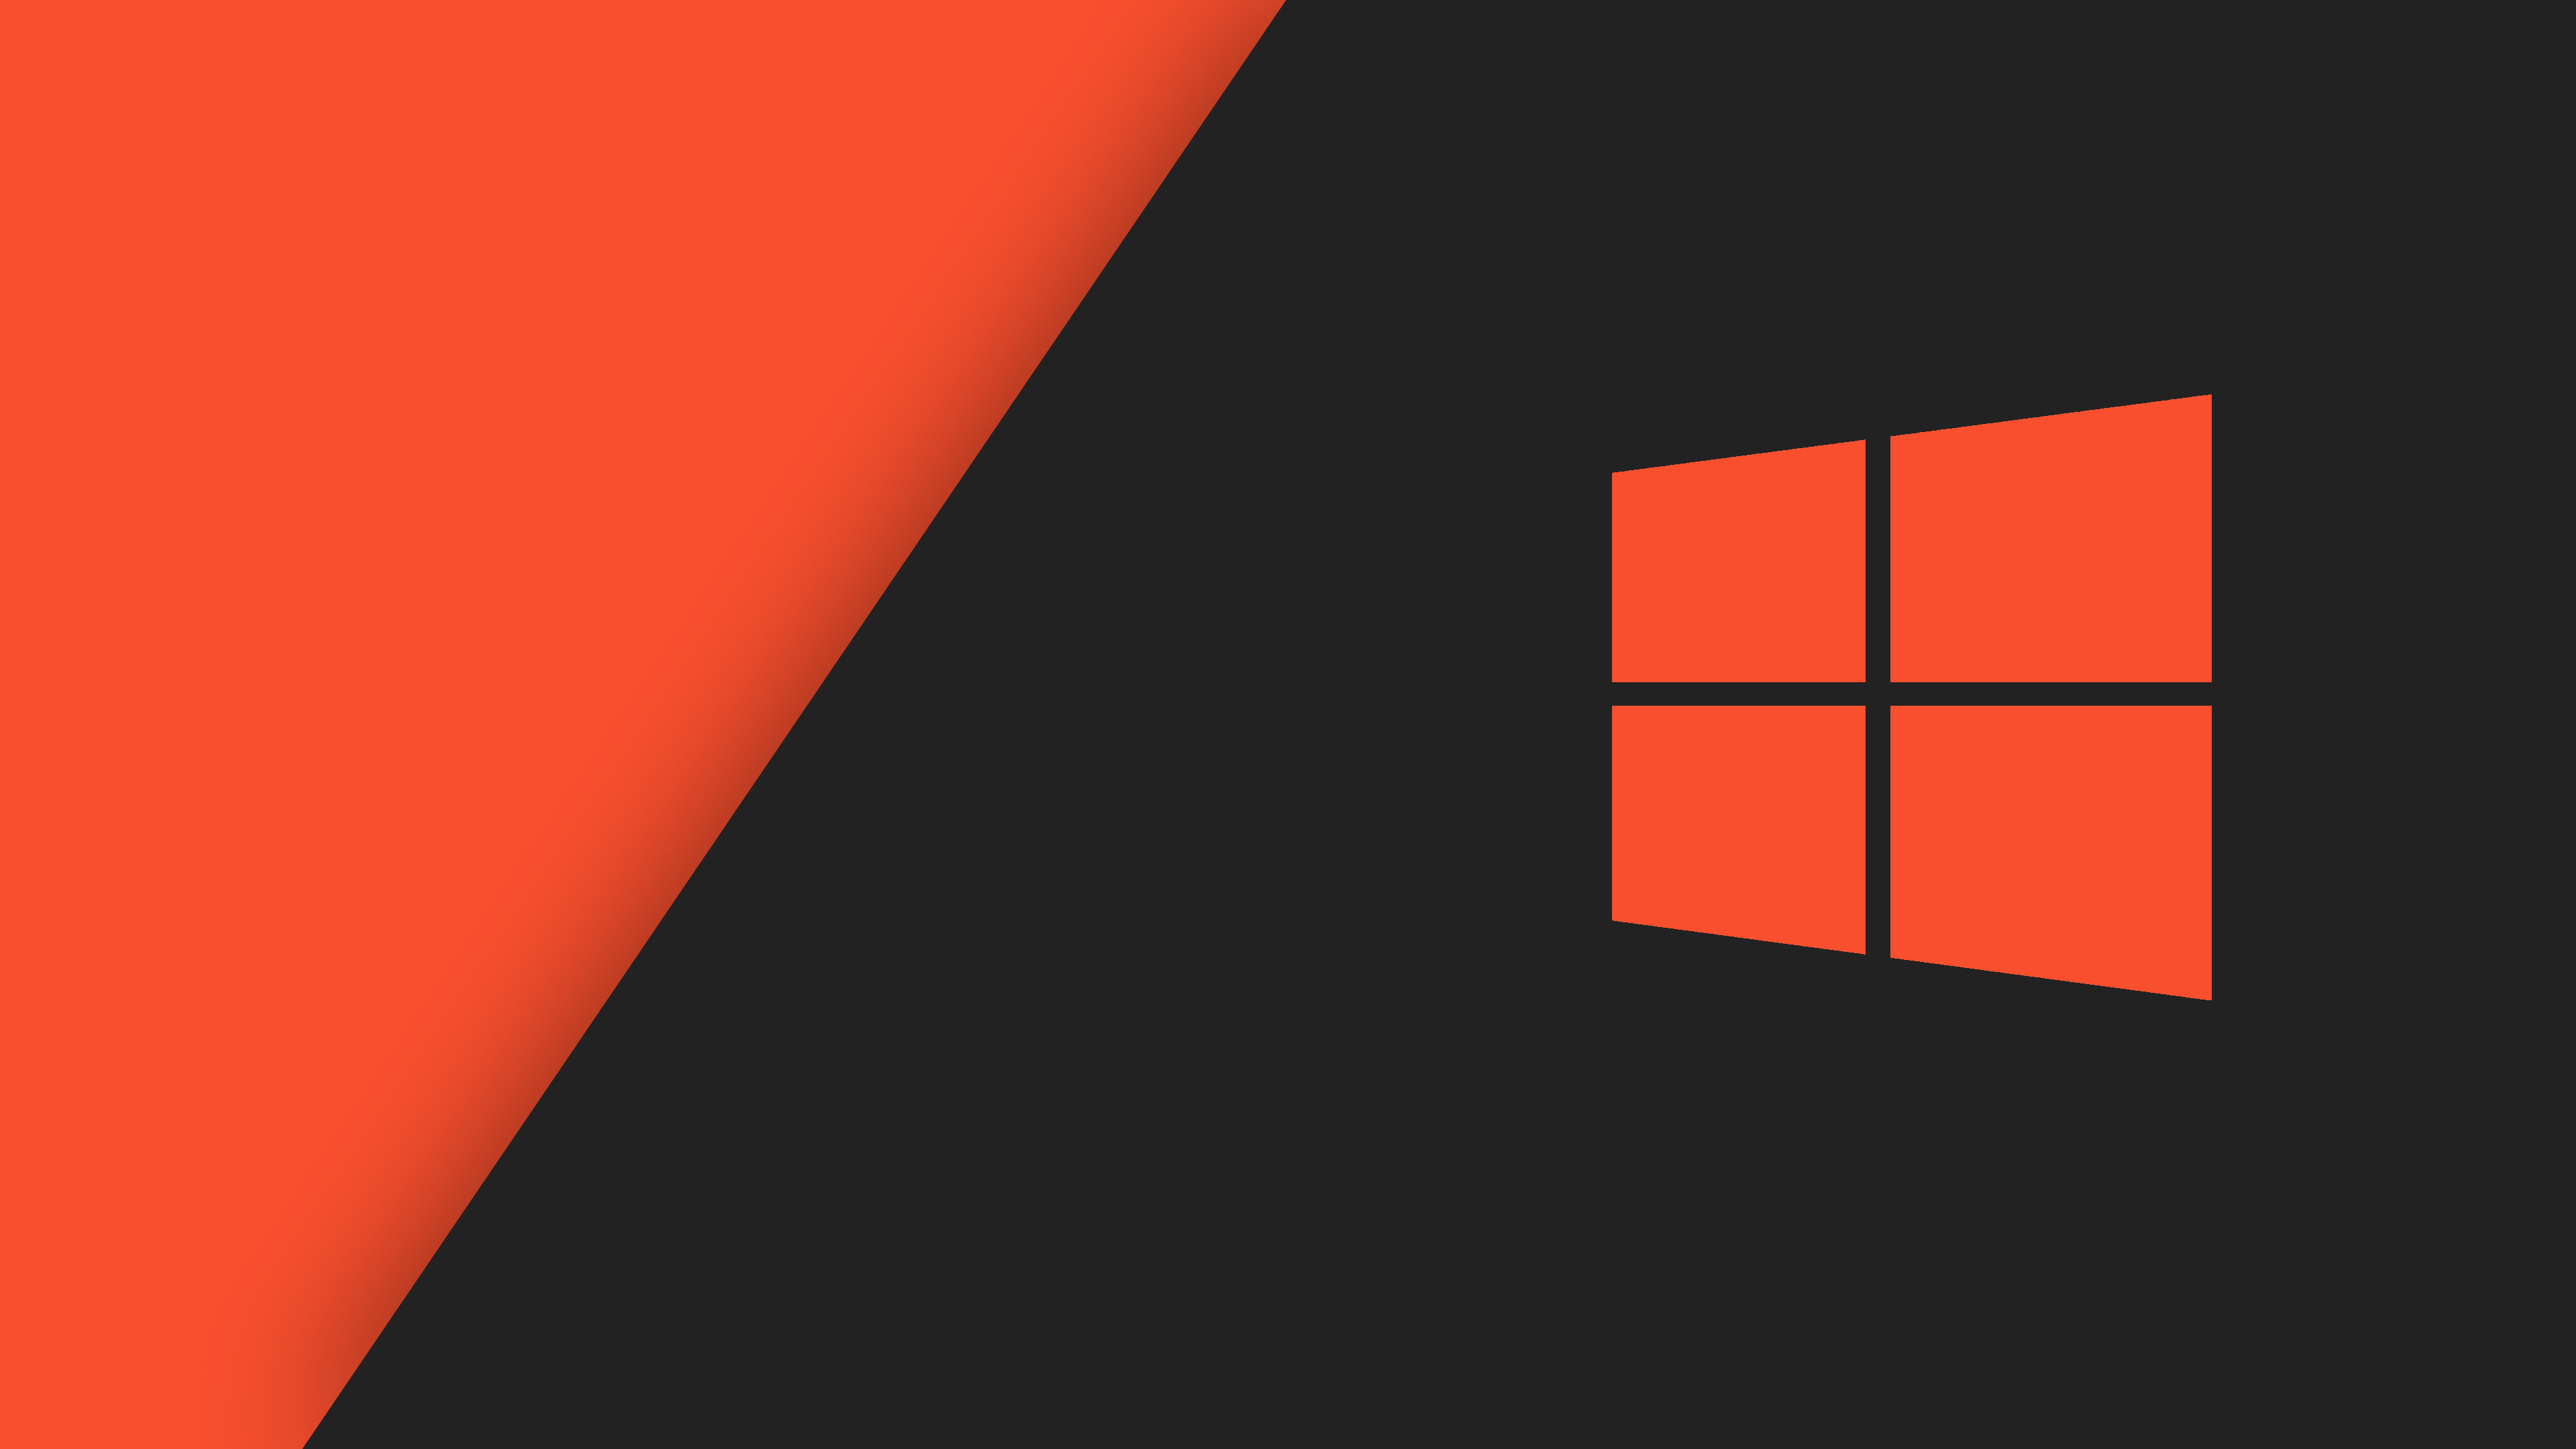 … Windows 10 Wallpaper Red/Grey by Spectalfrag